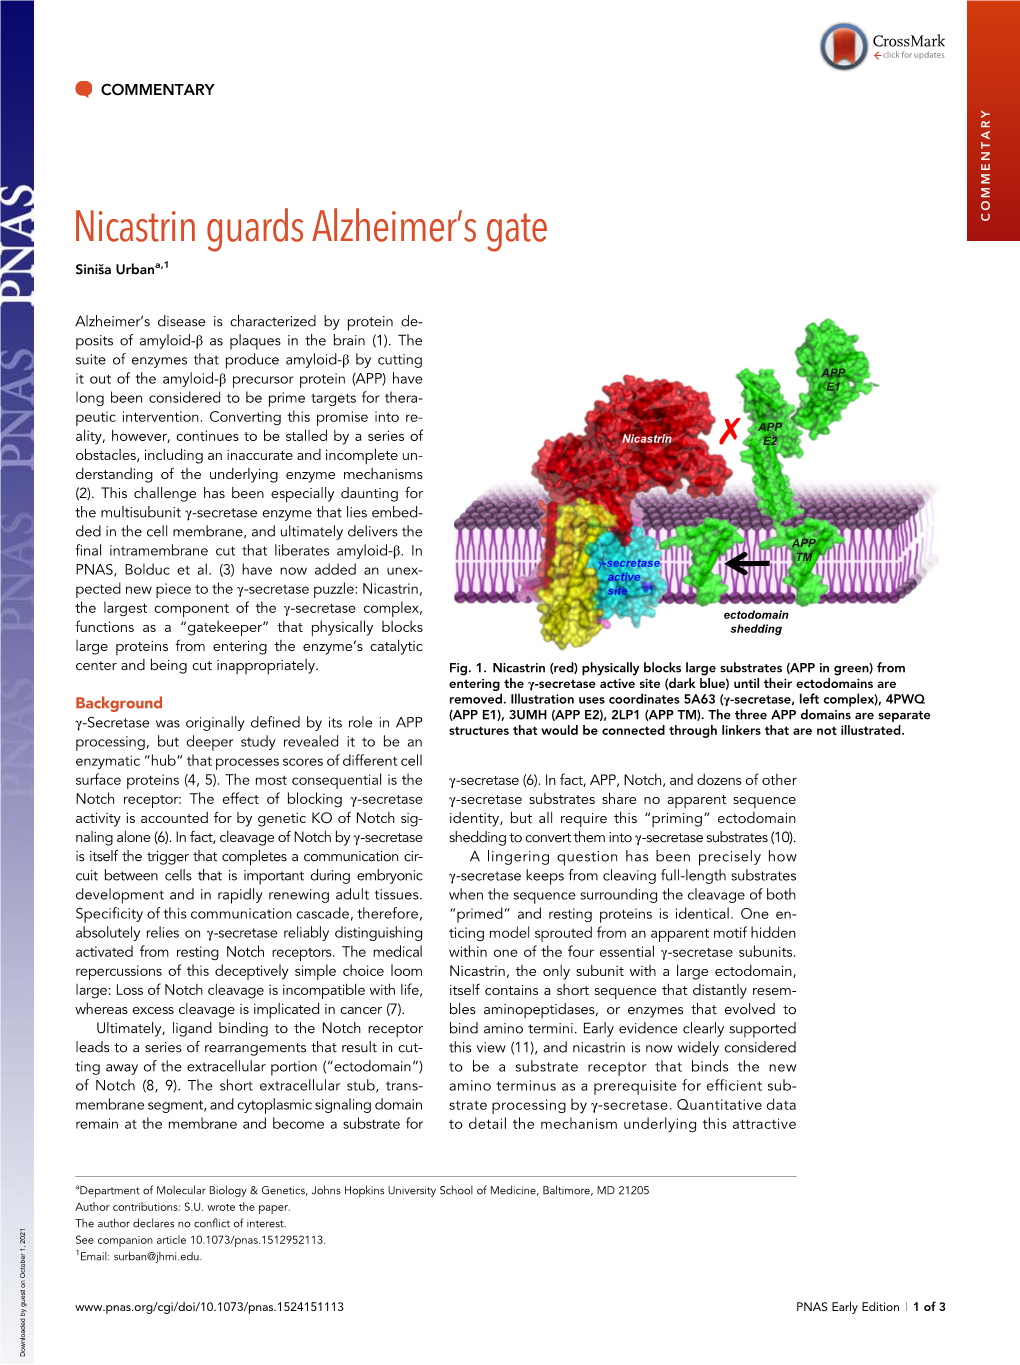 Nicastrin Guards Alzheimer's Gate